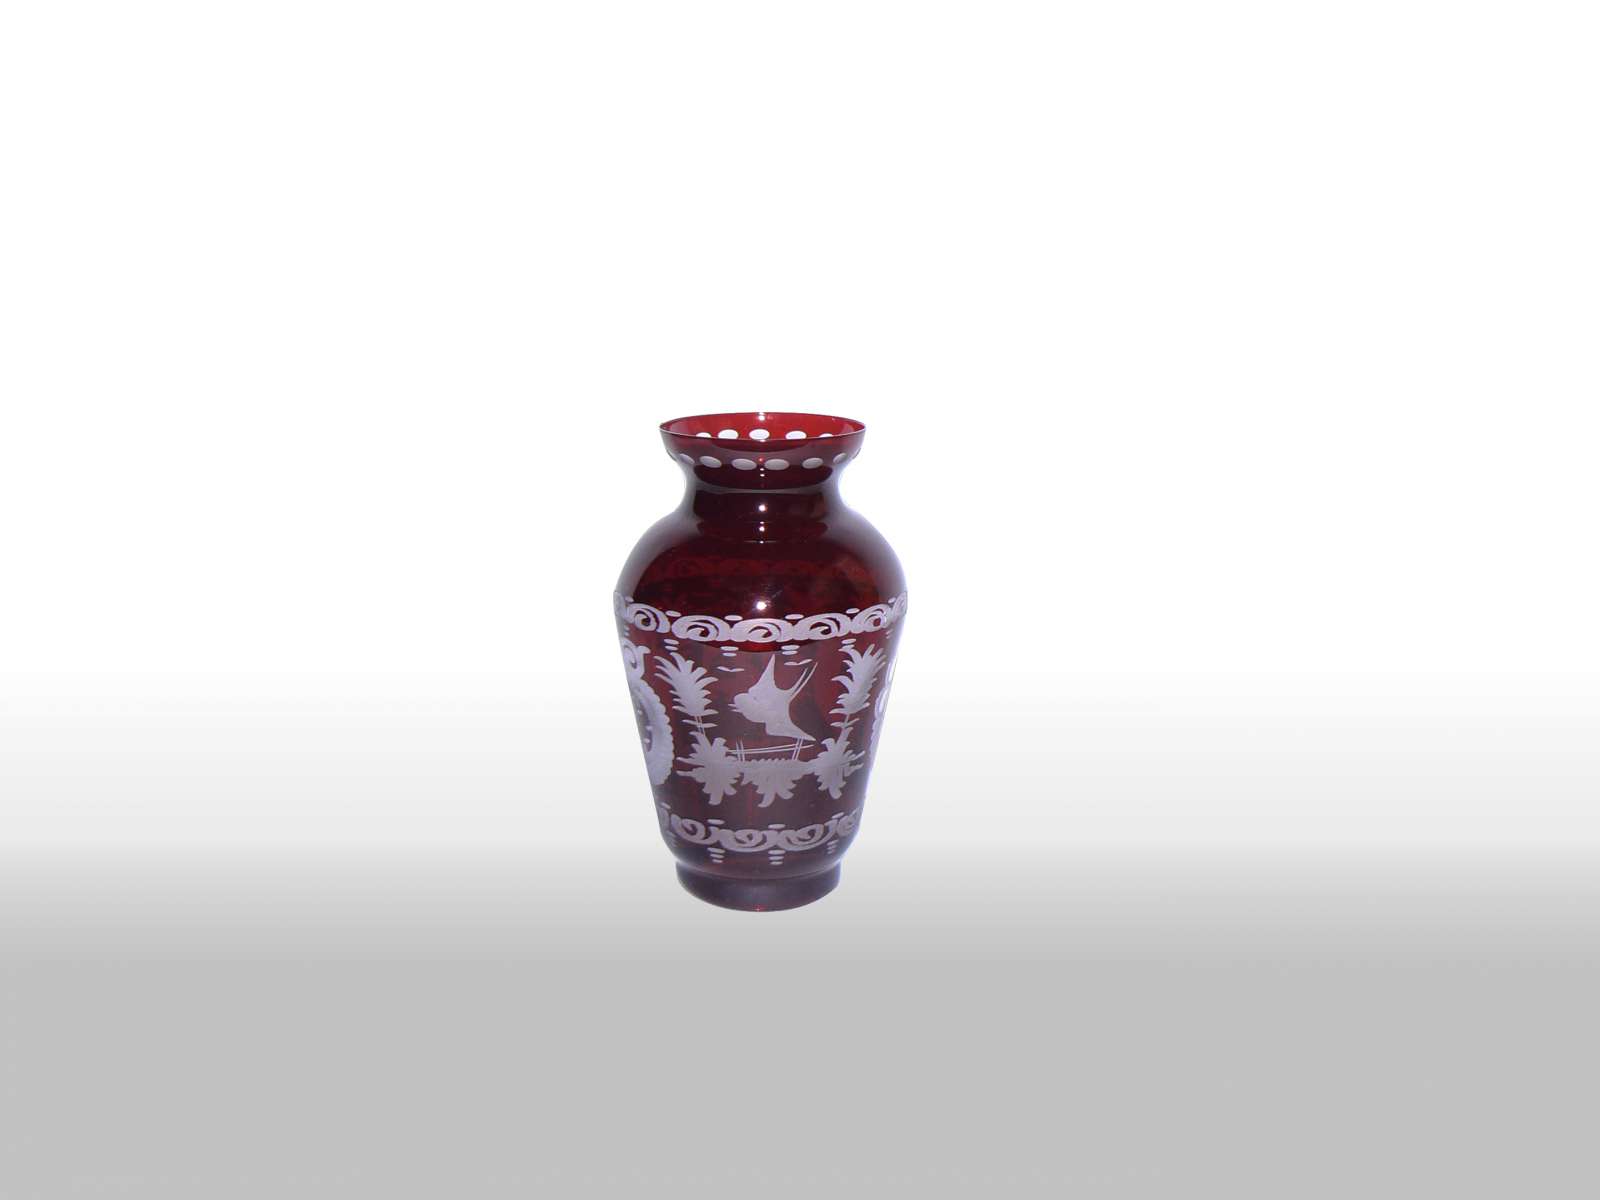 Sklo váza miniatura | Kód zboží: E/mini/8176/12/28011 červená, Arebeska | Cena za 1 kus: 0,- Kč